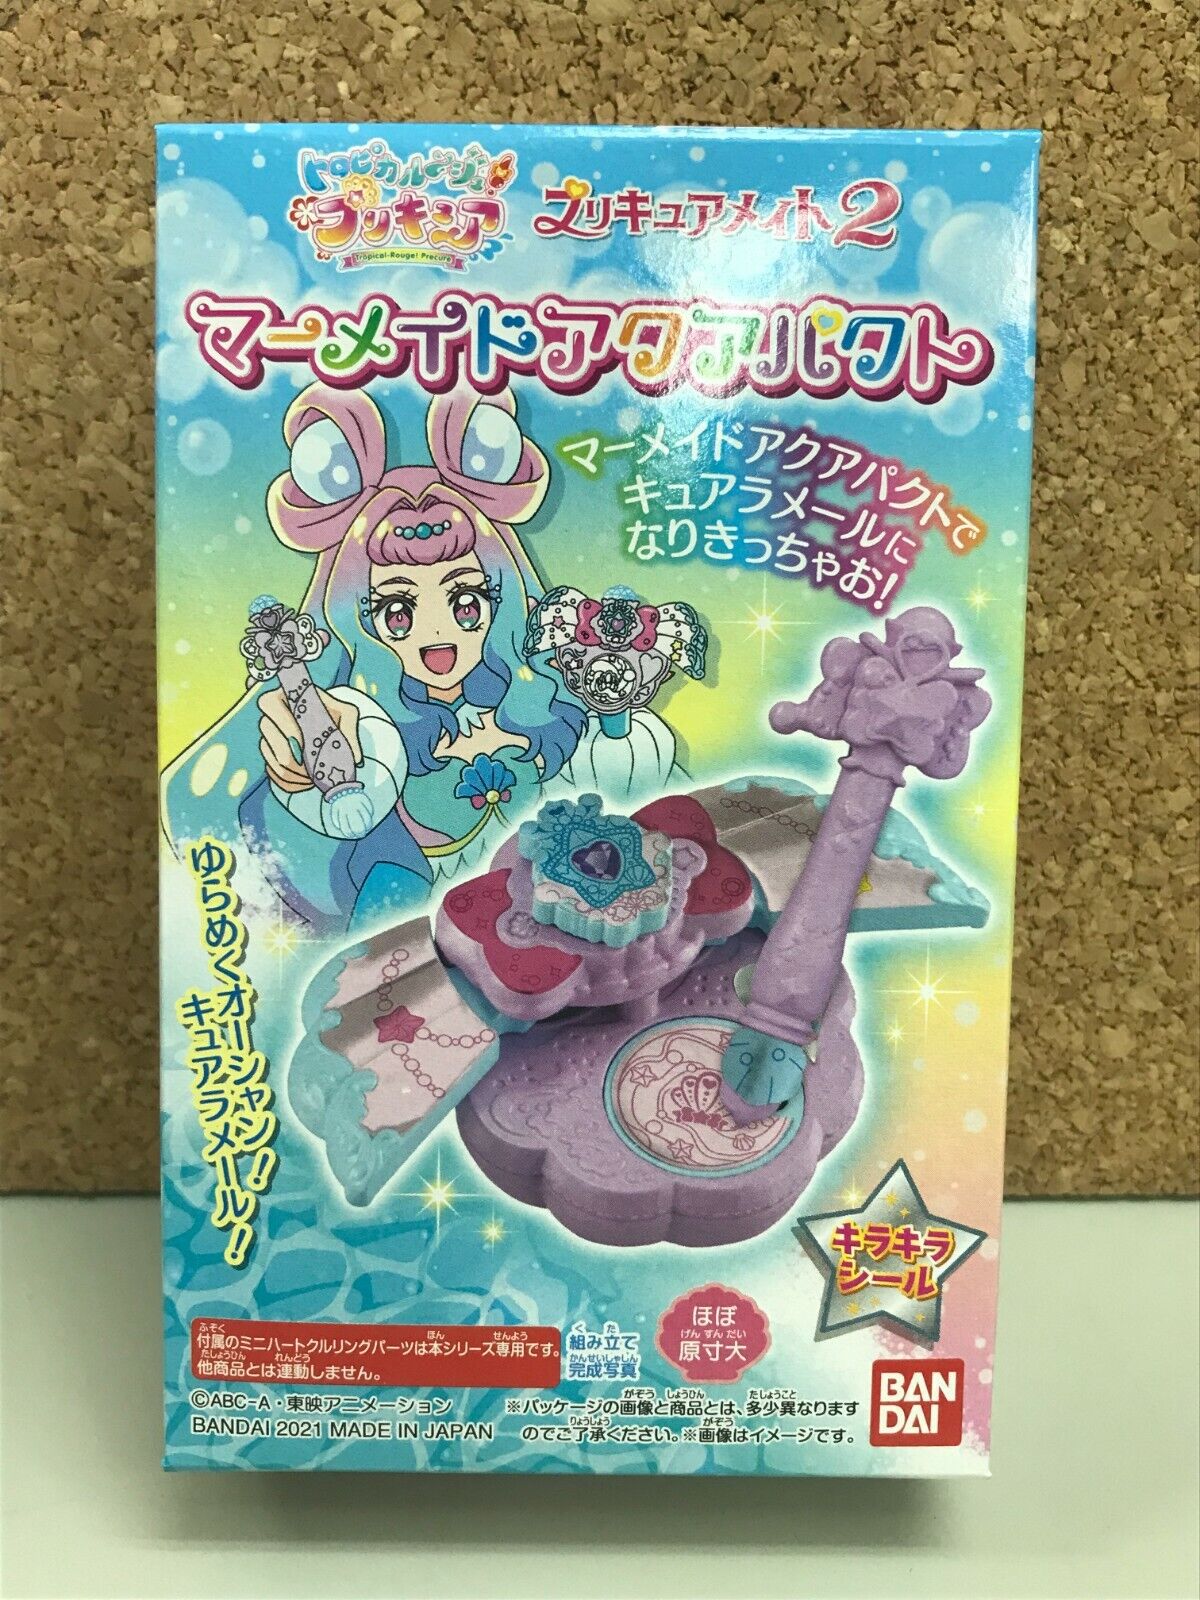 New Bandai Tropical-Rouge Pretty Cure Precure Mate 2 Mascot Mini Toy 1. Mermaid